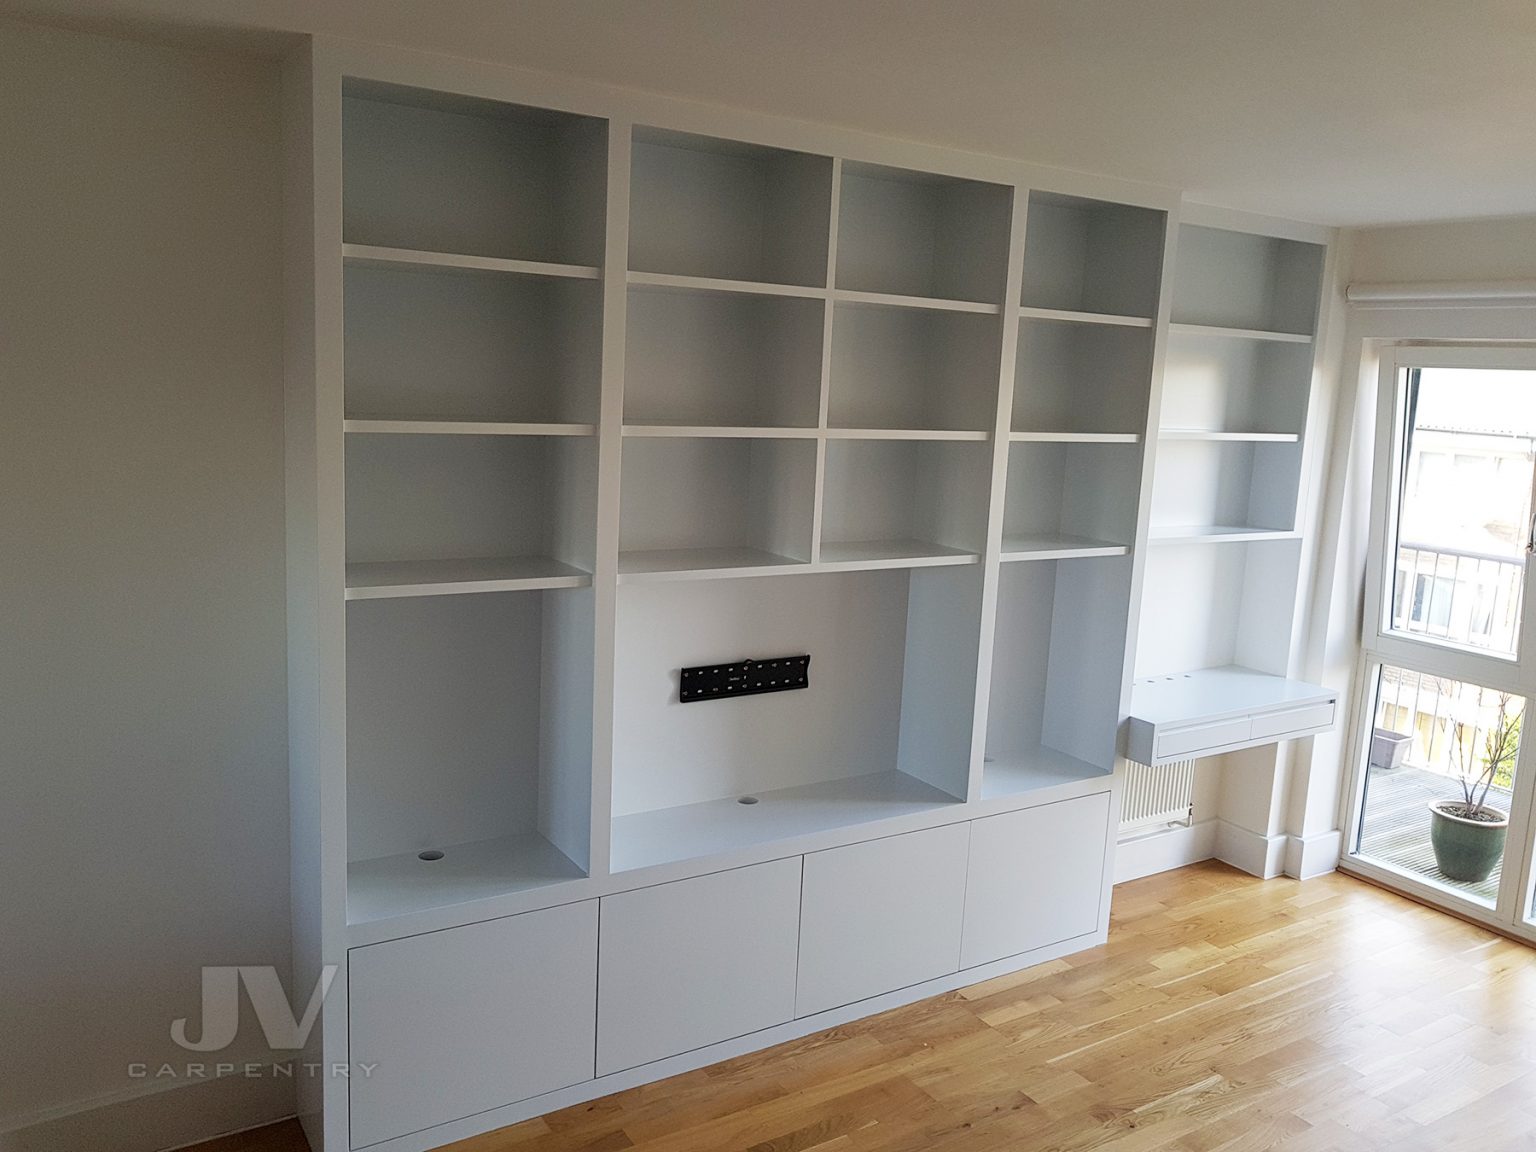 27 Custom Bookcases & Bespoke Shelving Units Ideas | JV Carpentry